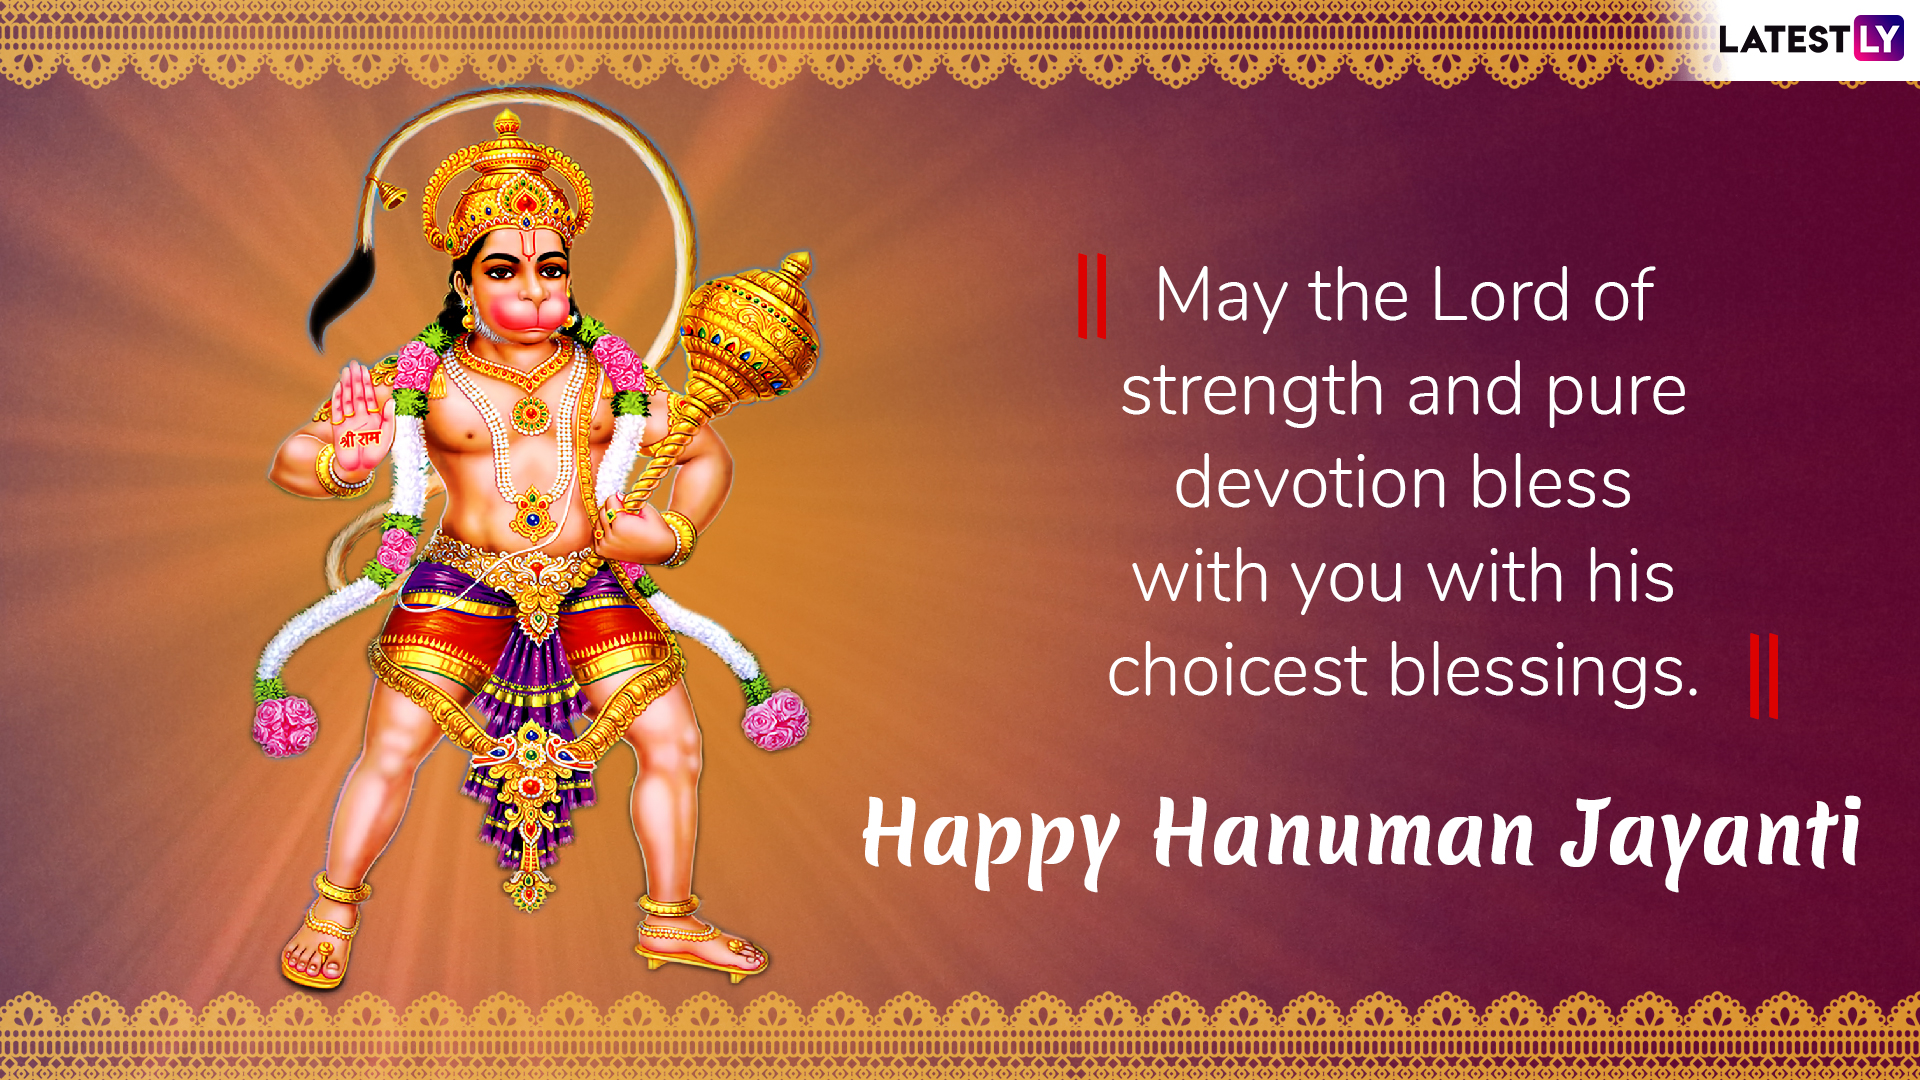 Hanuman Jayanti 2019 Wishes, Greetings in English: WhatsApp ...